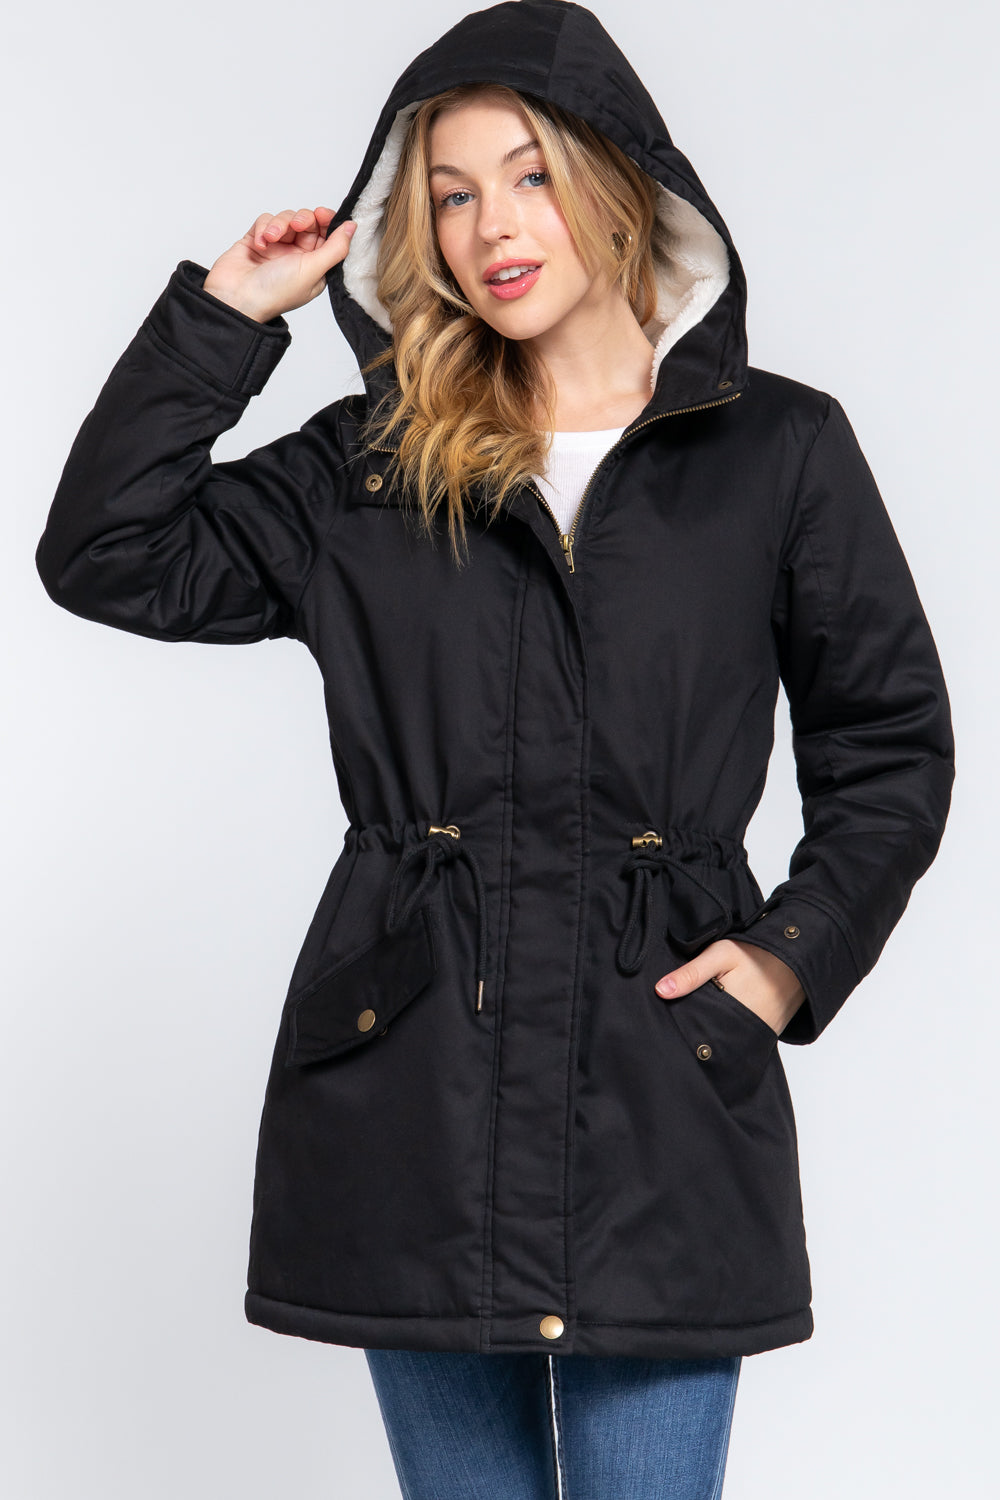 Black L - Fleece Lined Fur Hoodie Utility Jacket - 4 colors - womens jacket at TFC&H Co.